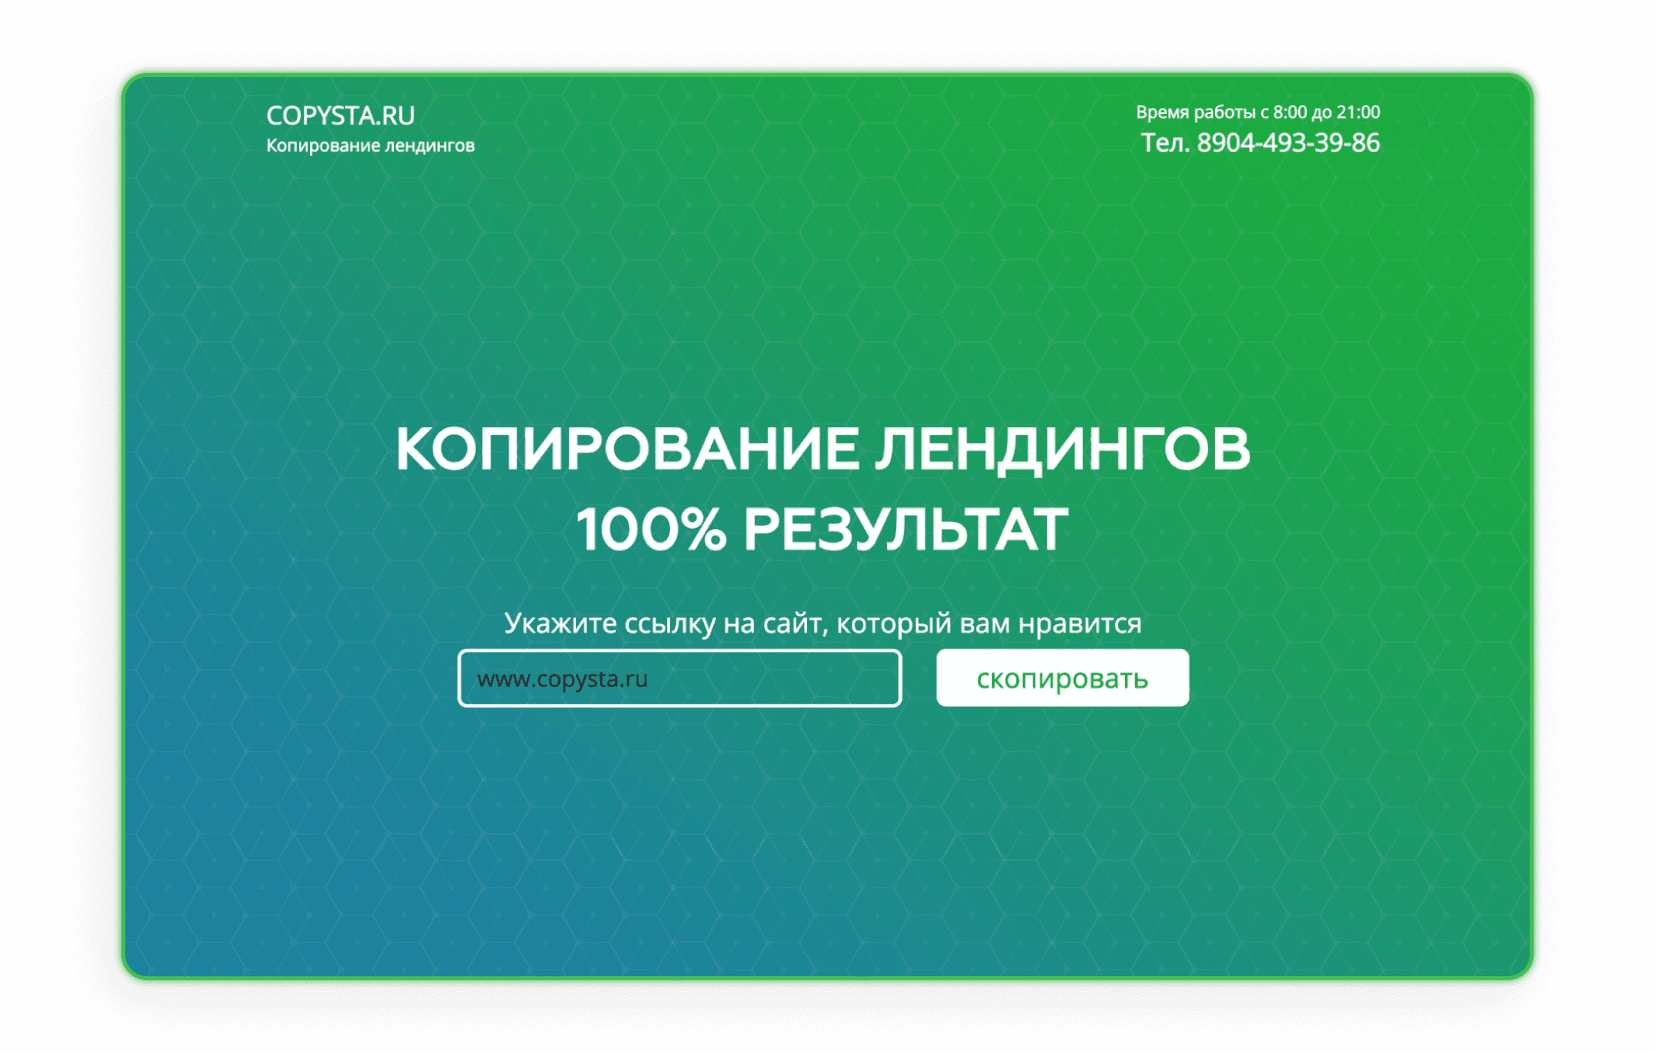 Interface of the site copysta.ru